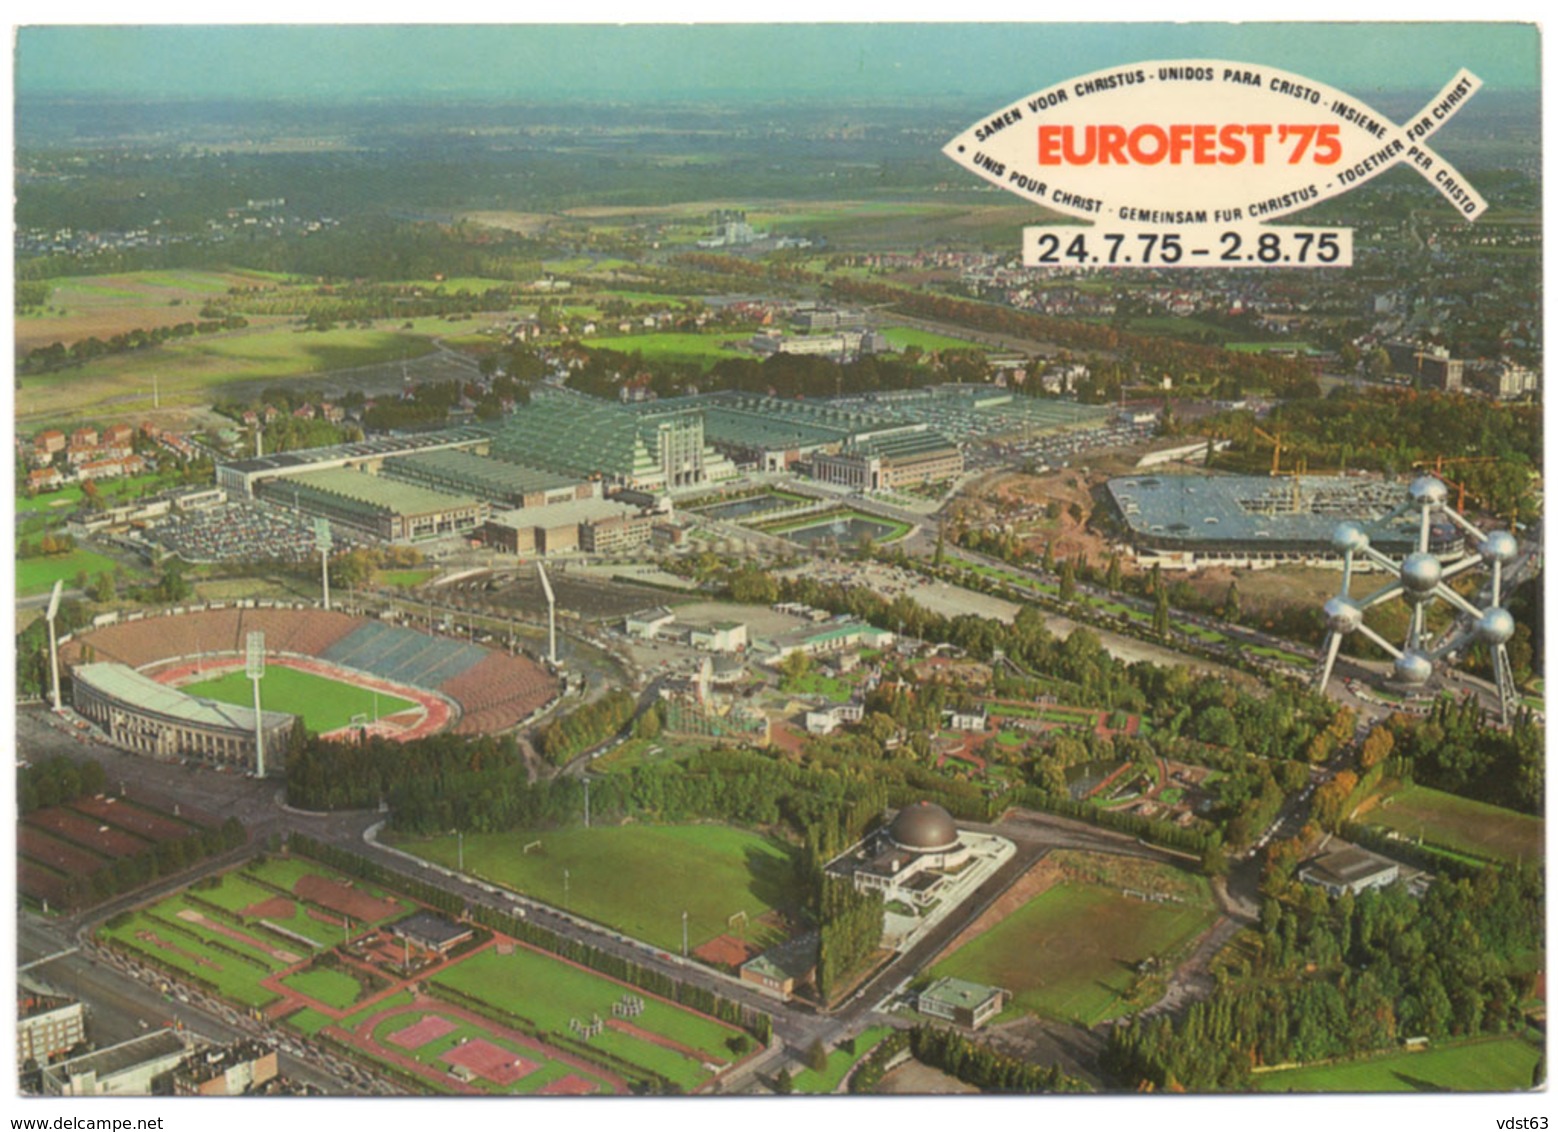 Bruxelles Brussel 1975 STADE FOOTBALL HEYSEL Atomium Palais Centenaire Vue Aérienne Aerial Vew - Brussels Soccer Stadium - Football